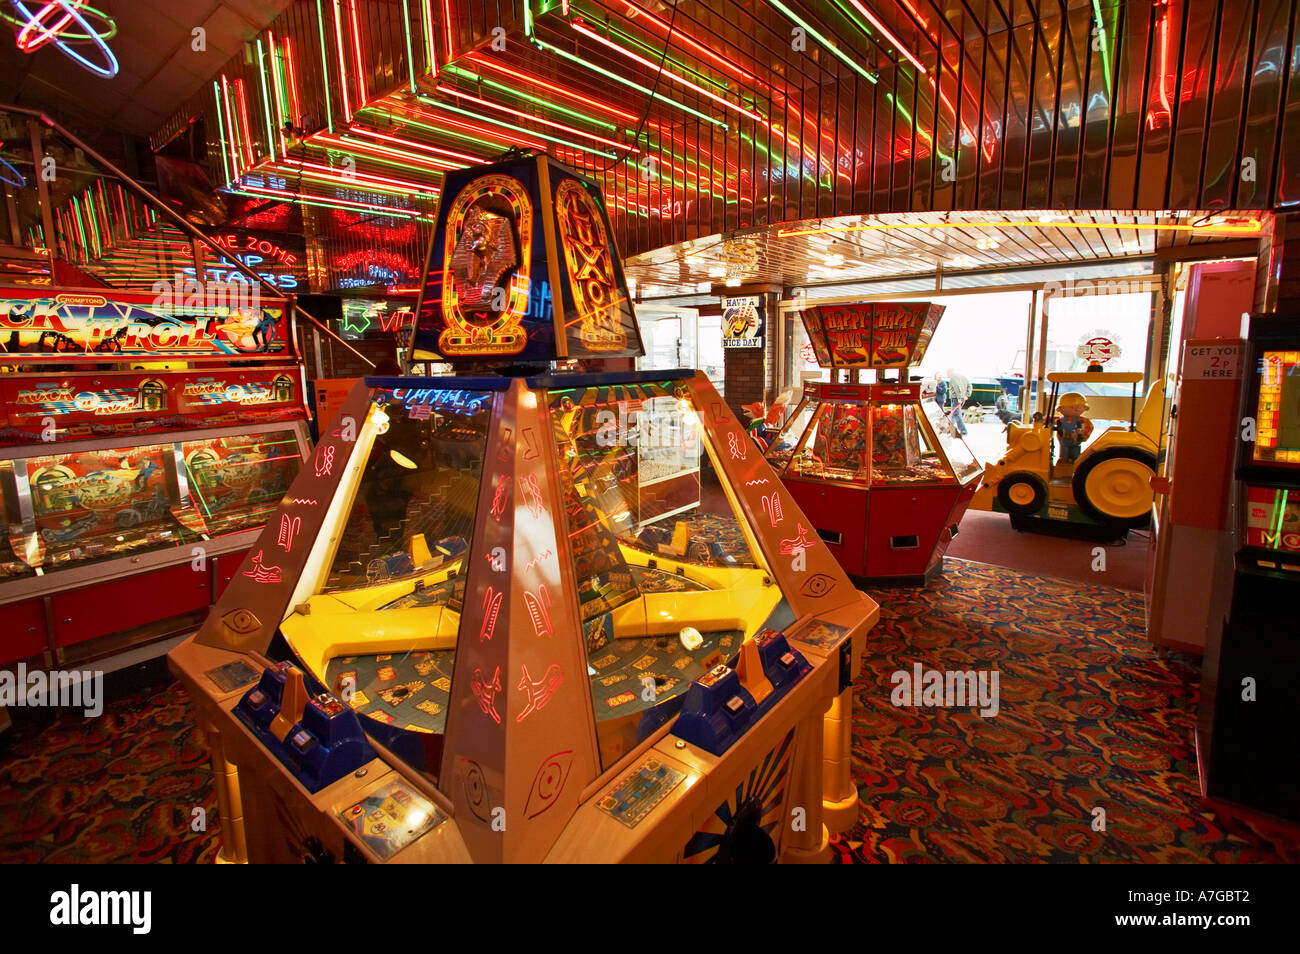 Amusement Arcade interior with slot machines UK Stock Photo - Alamy